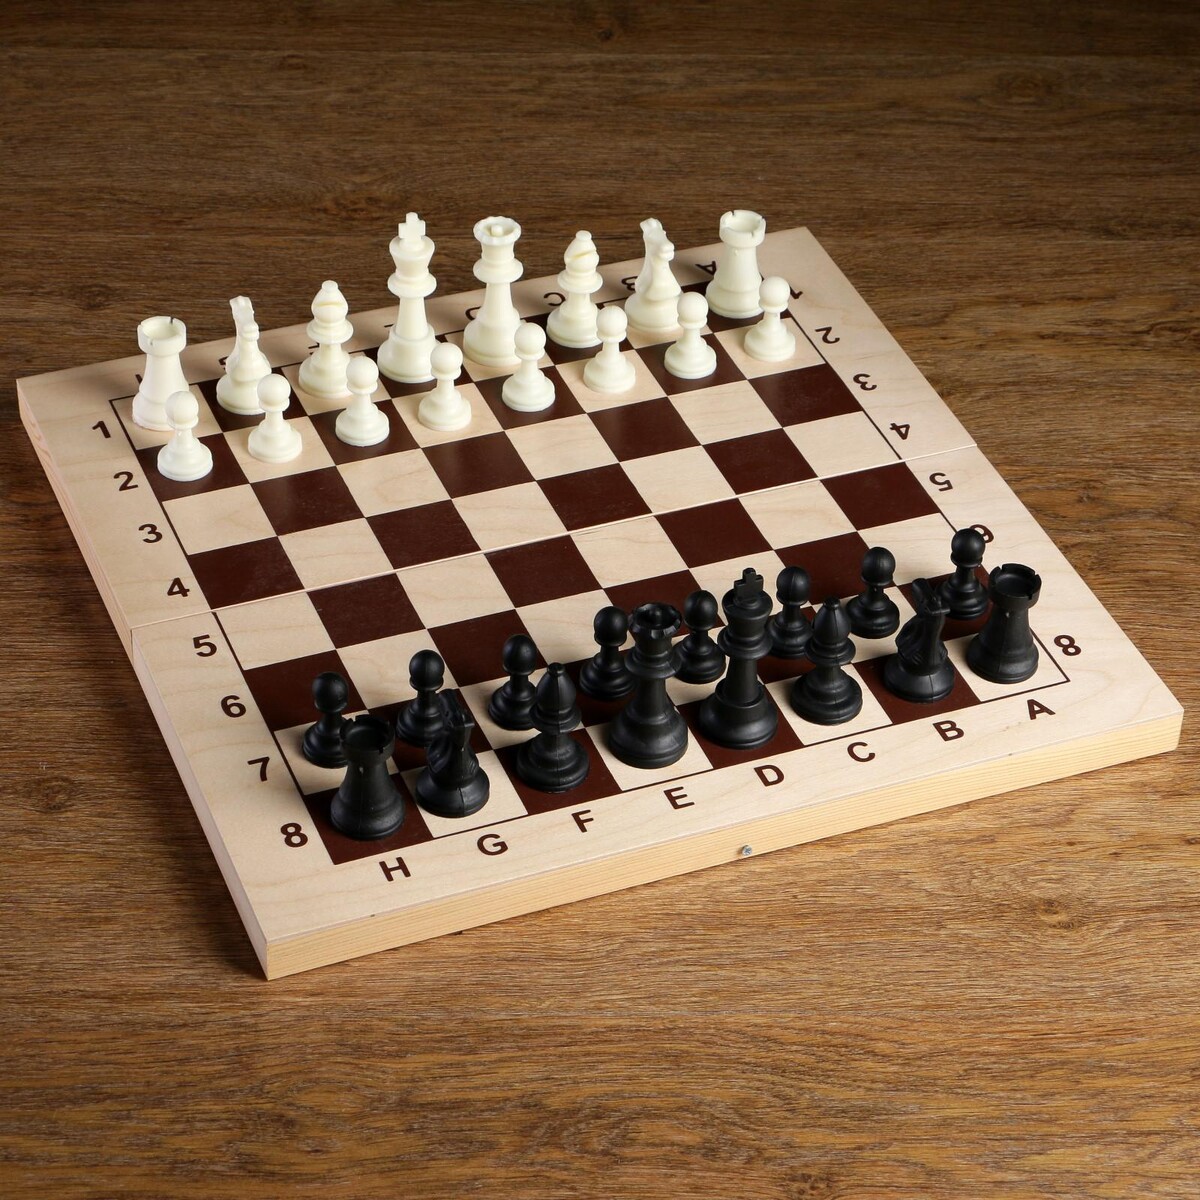 Шахматные фигуры, пластик, король h-9 см, пешка h-4.1 см железный король